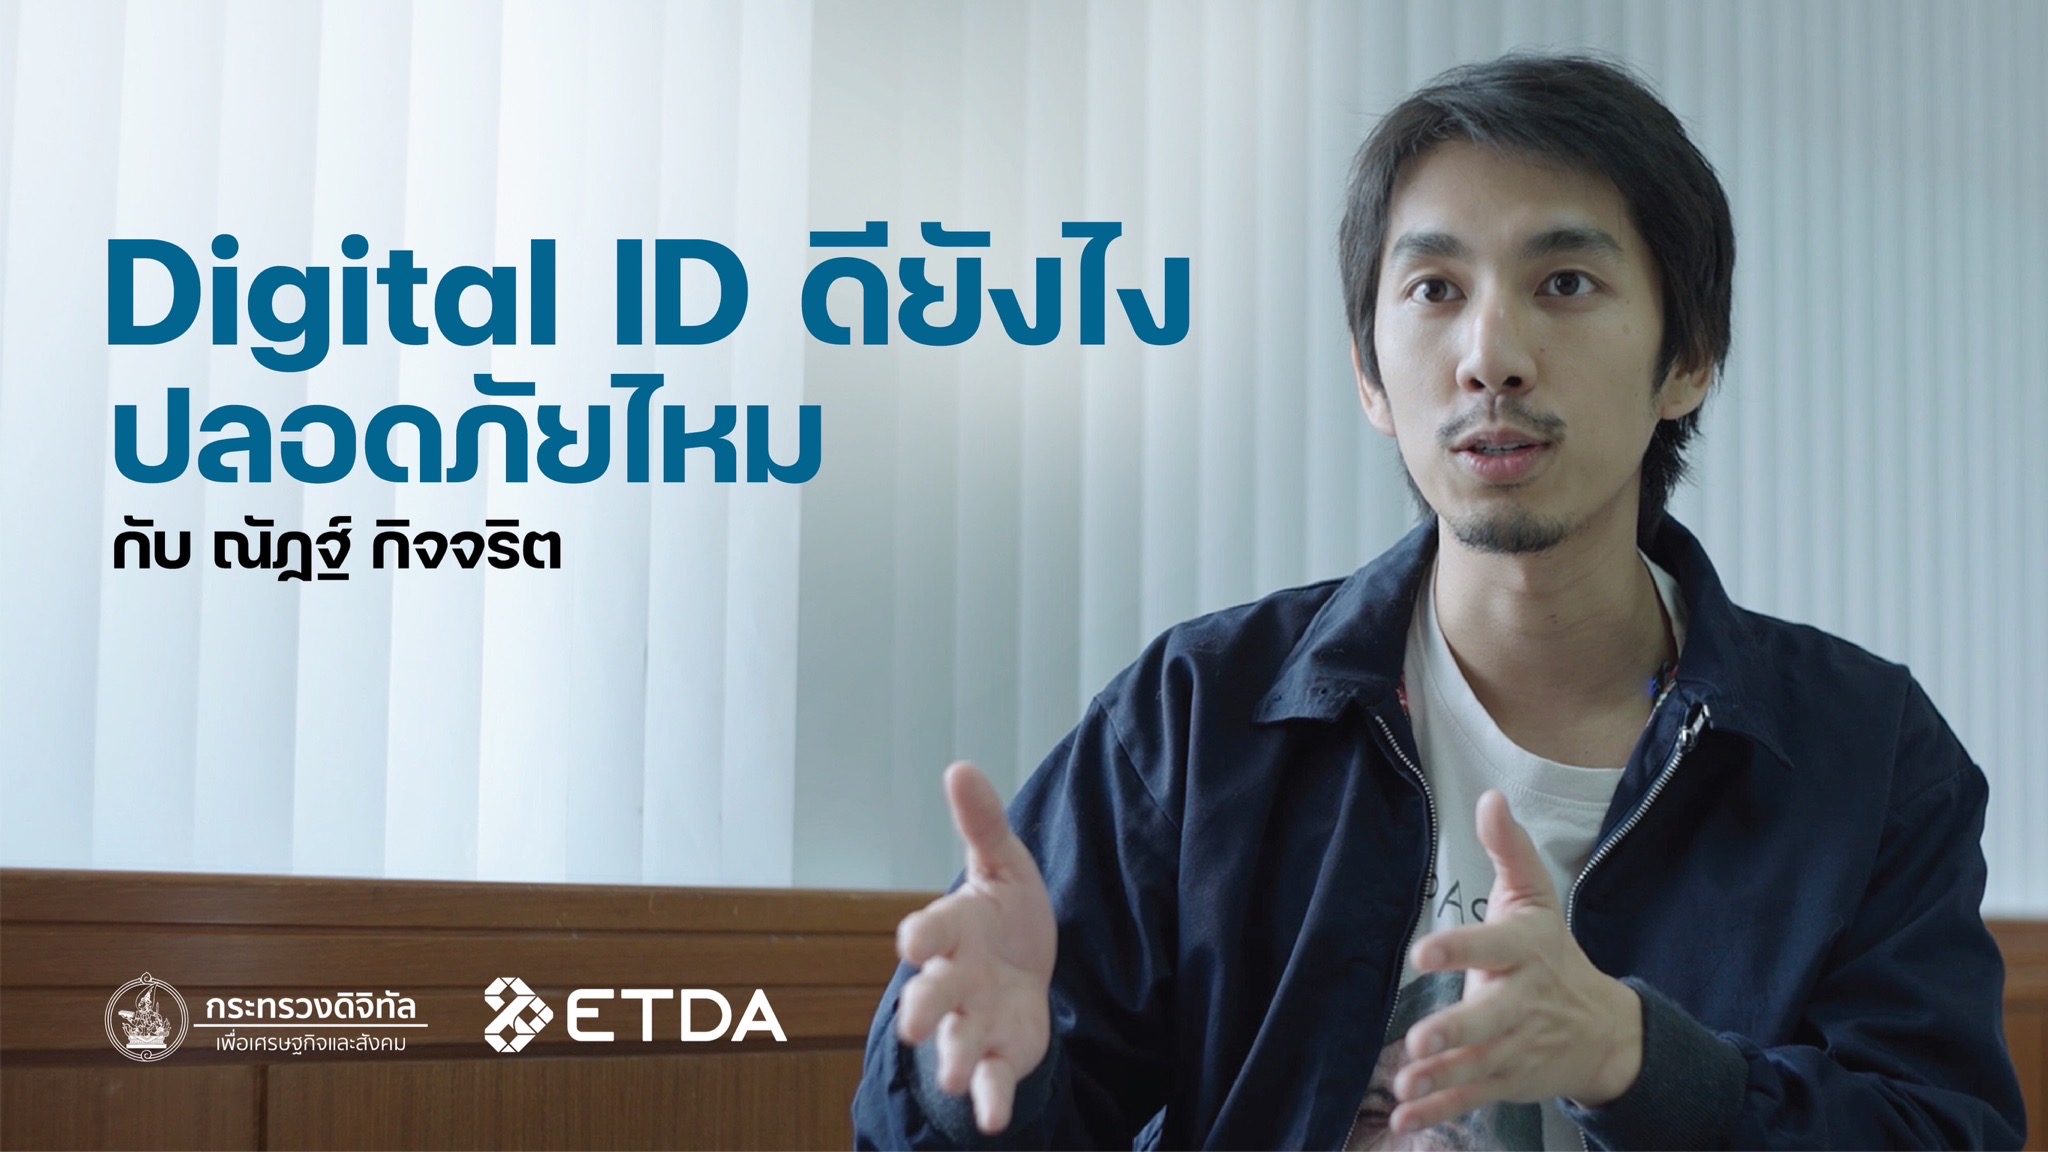 Digital ID ดียังไง ปลอดภัยแค่ไหน กับ ณัฏฐ์ กิจจริต